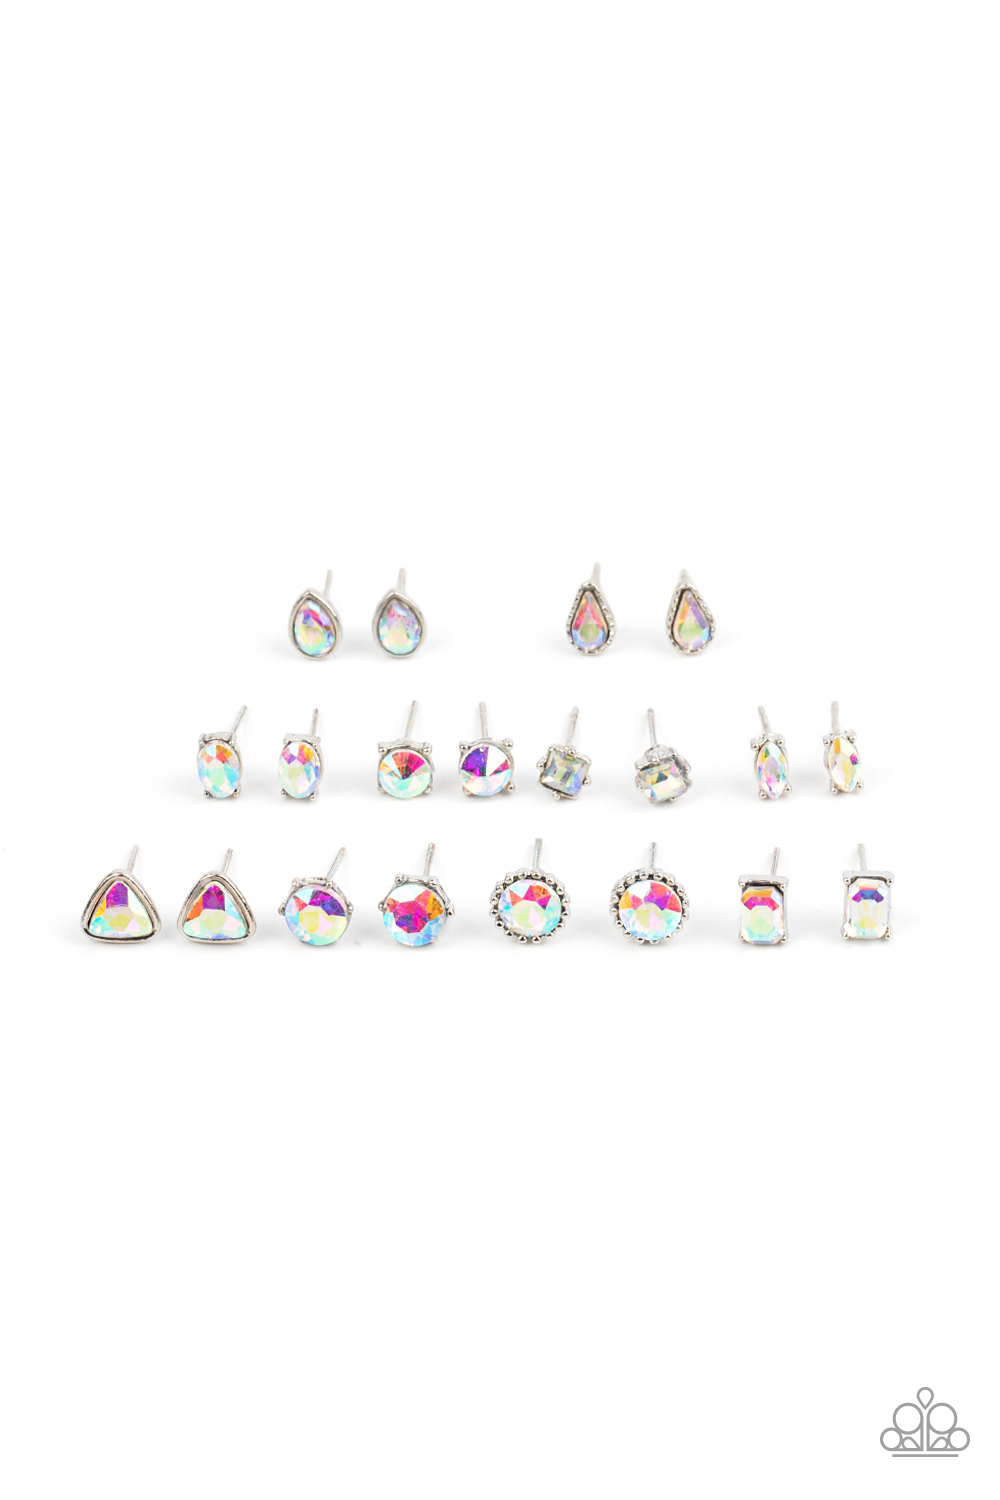 Iridescent Rhinestone Earrings (4435)